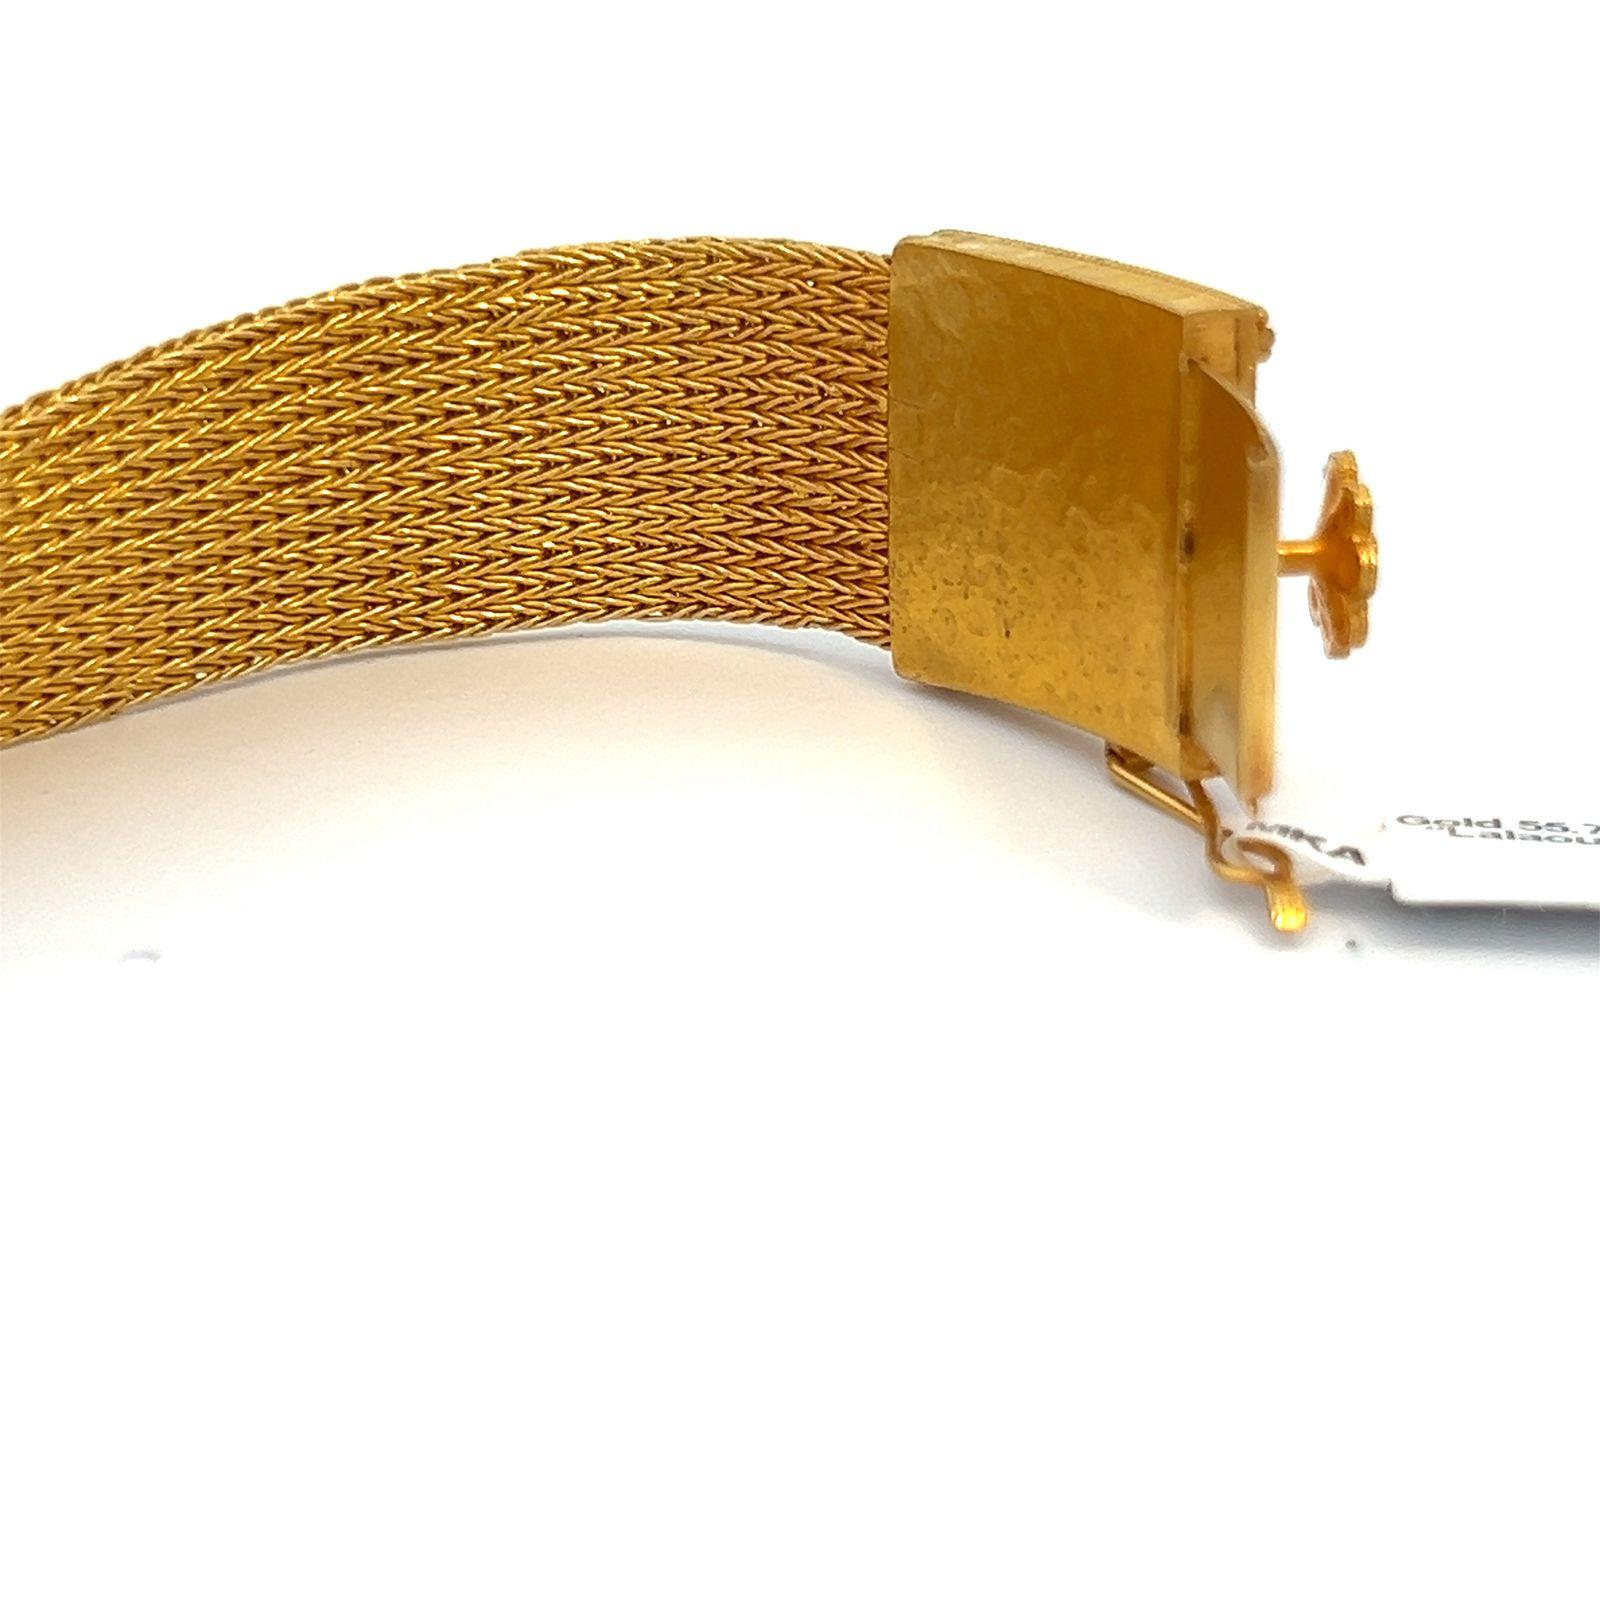  LALAoUNIS Vintage Yellow Gold Woven Bracelet For Sale 1